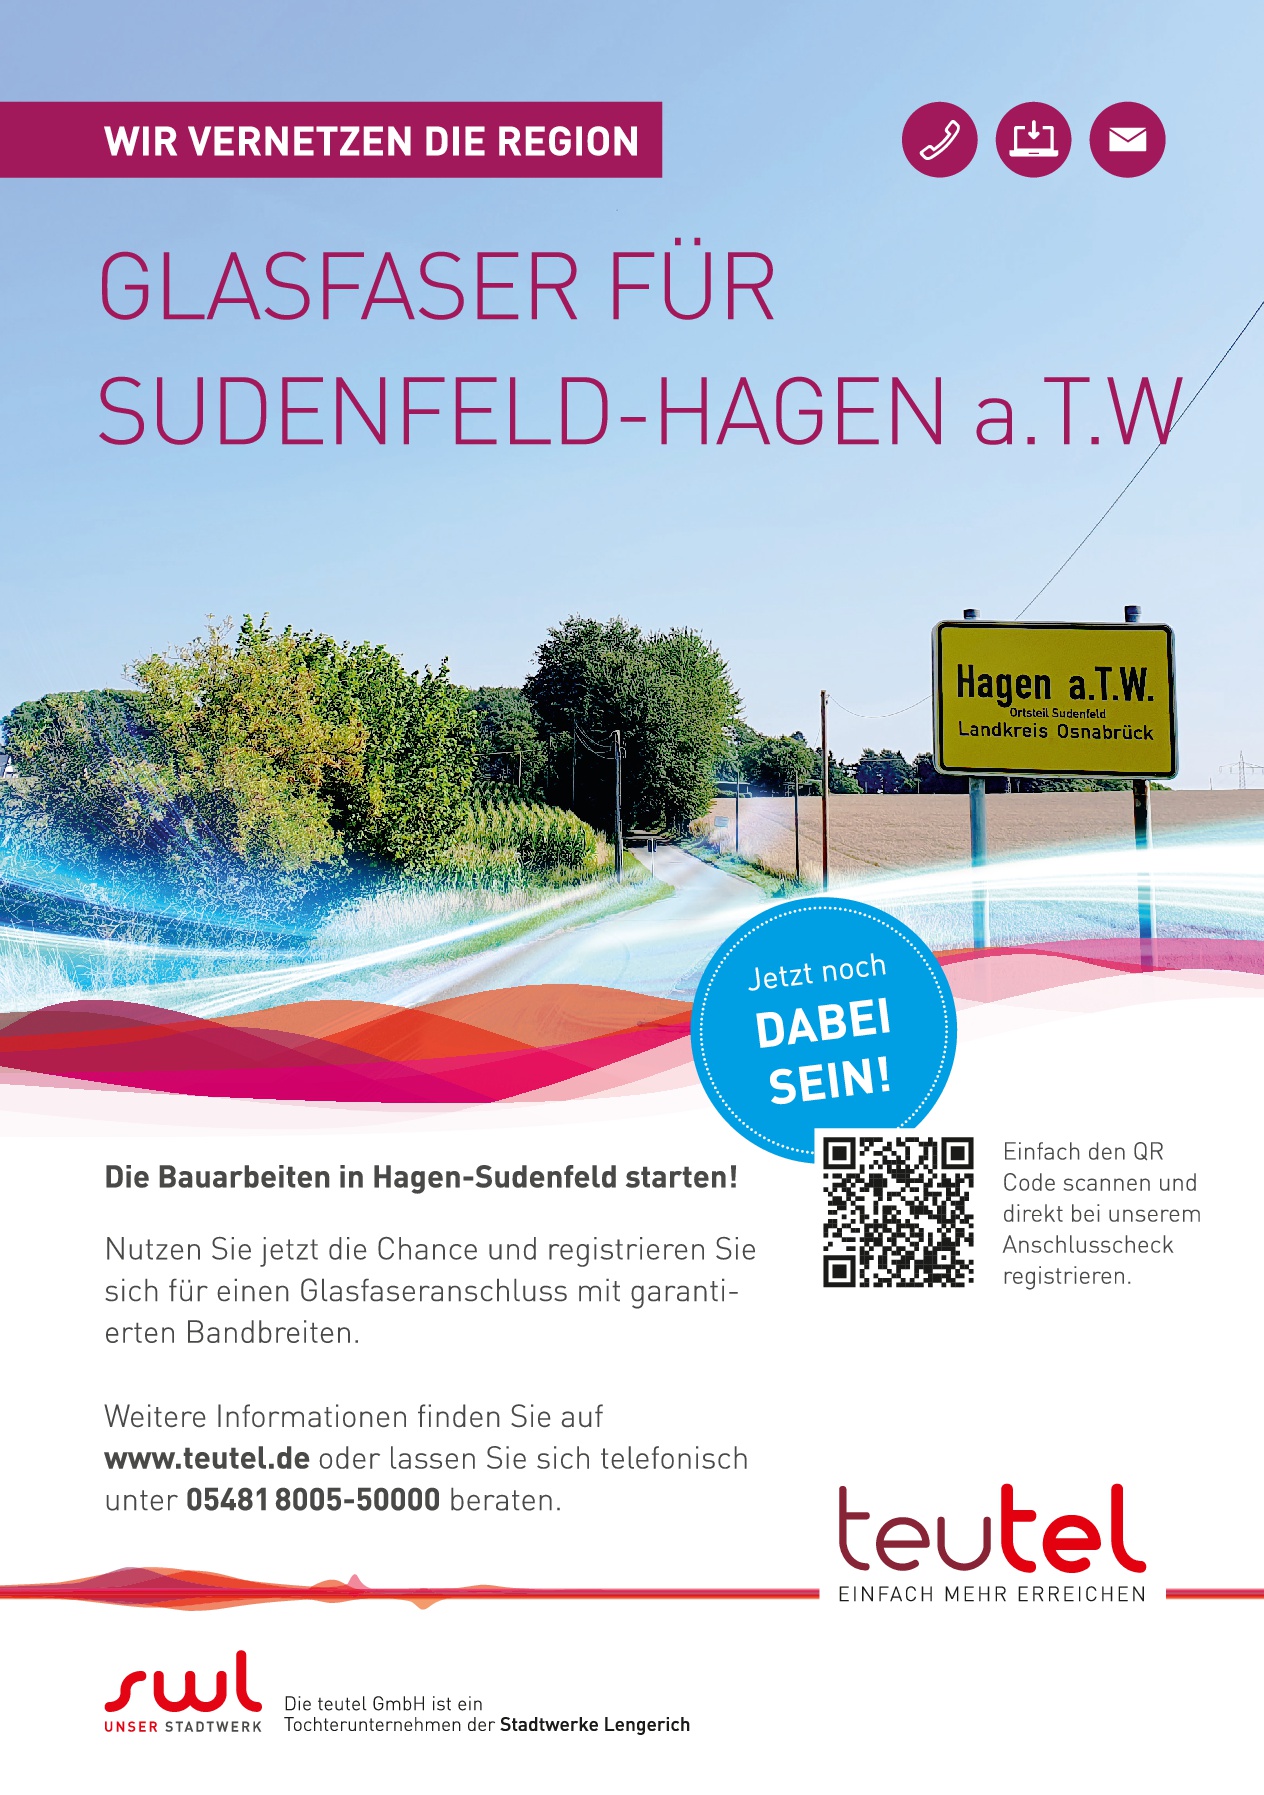 TEU 0258 21 Anzeige Glasfaser für Hagen Sudenfeld 210x300mm X3